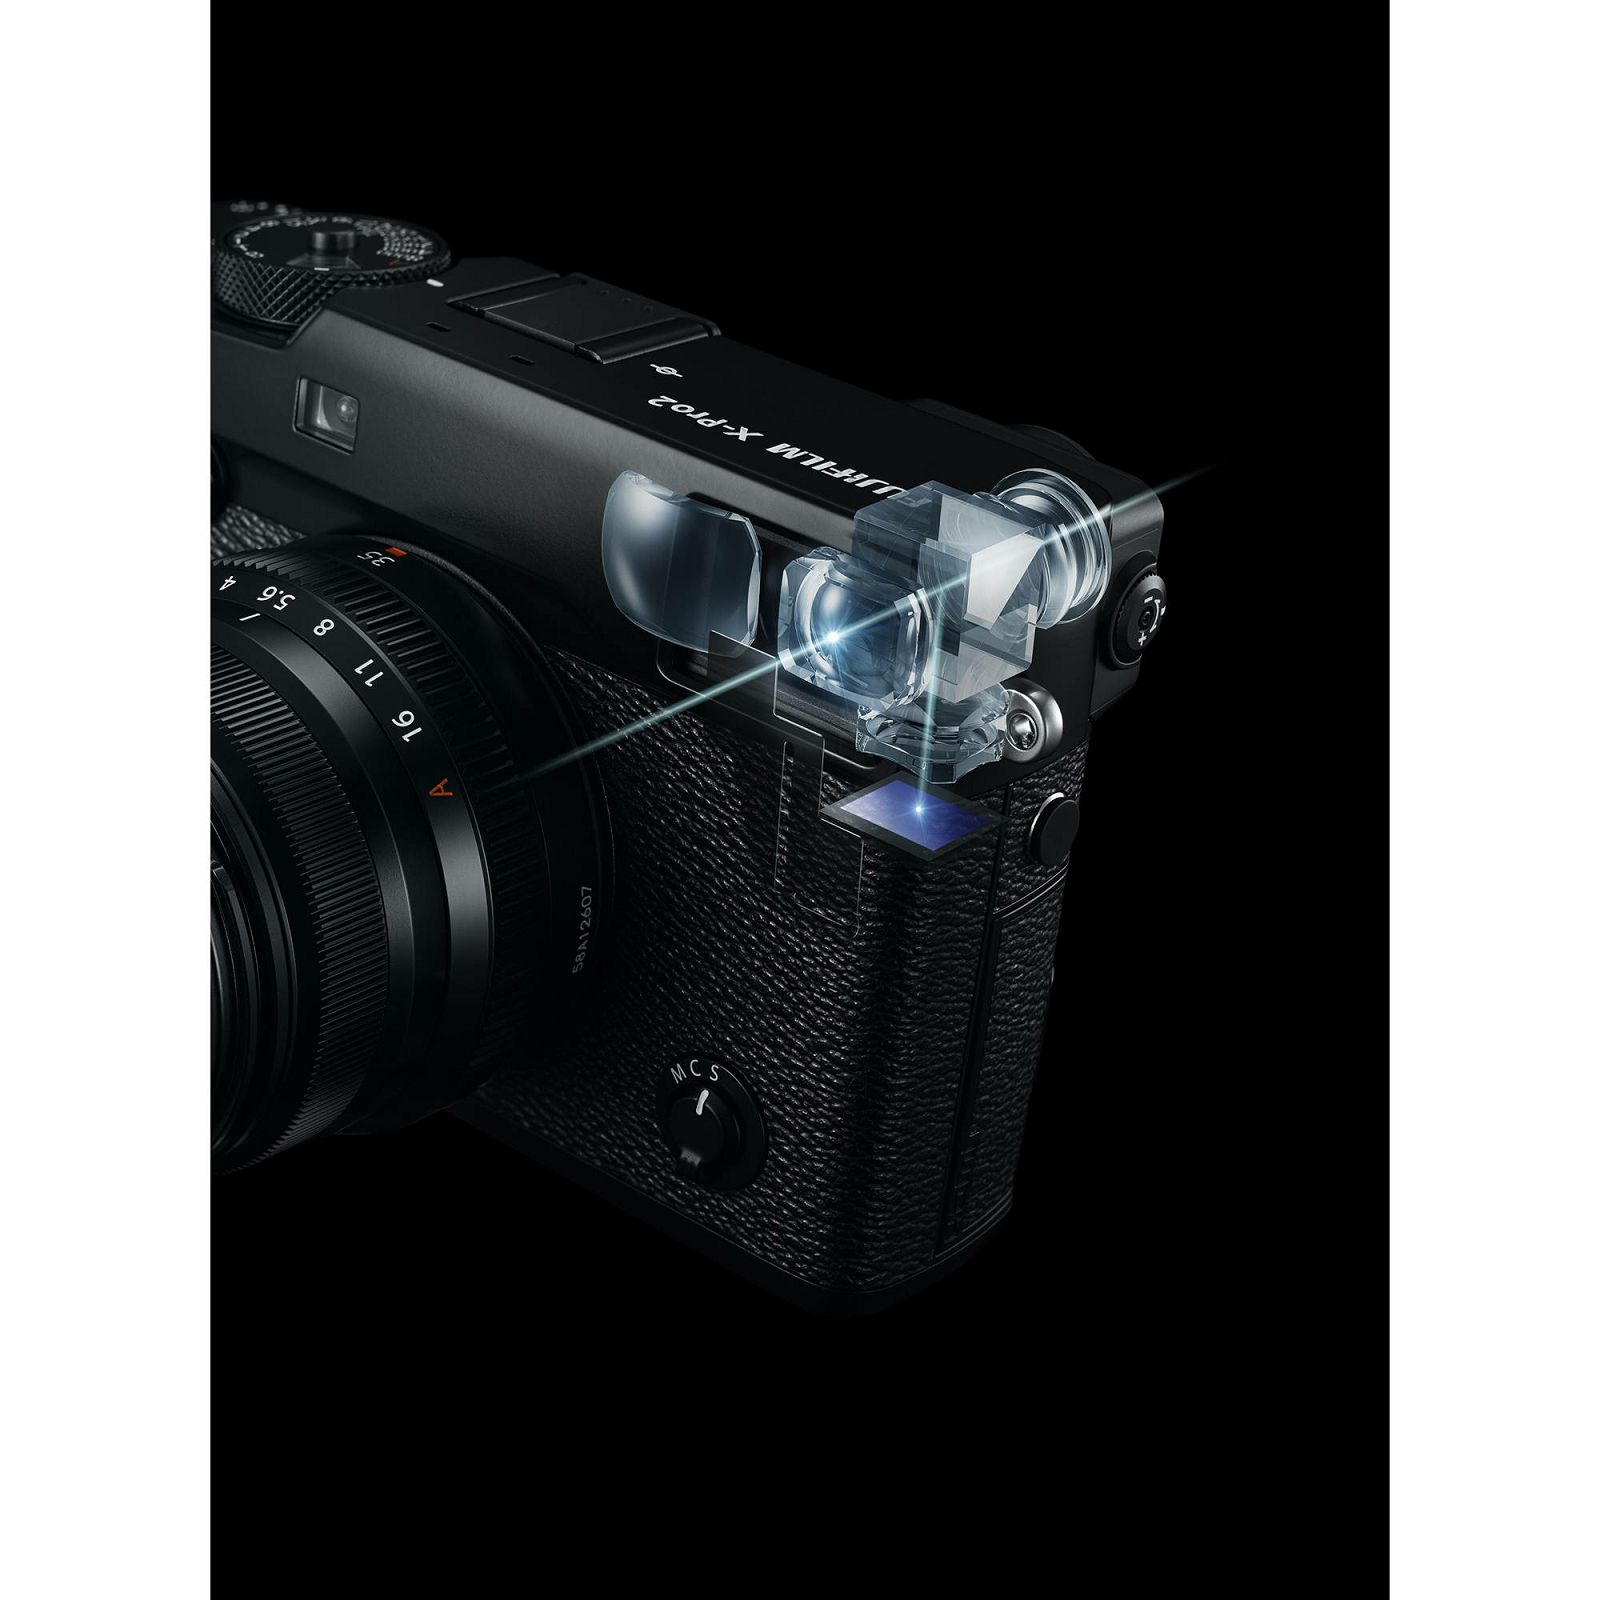 Fujifilm X-PRO 2 Body Black crni Digitalni fotoaparat Mirrorless Digital Camera Fuji X-Pro2